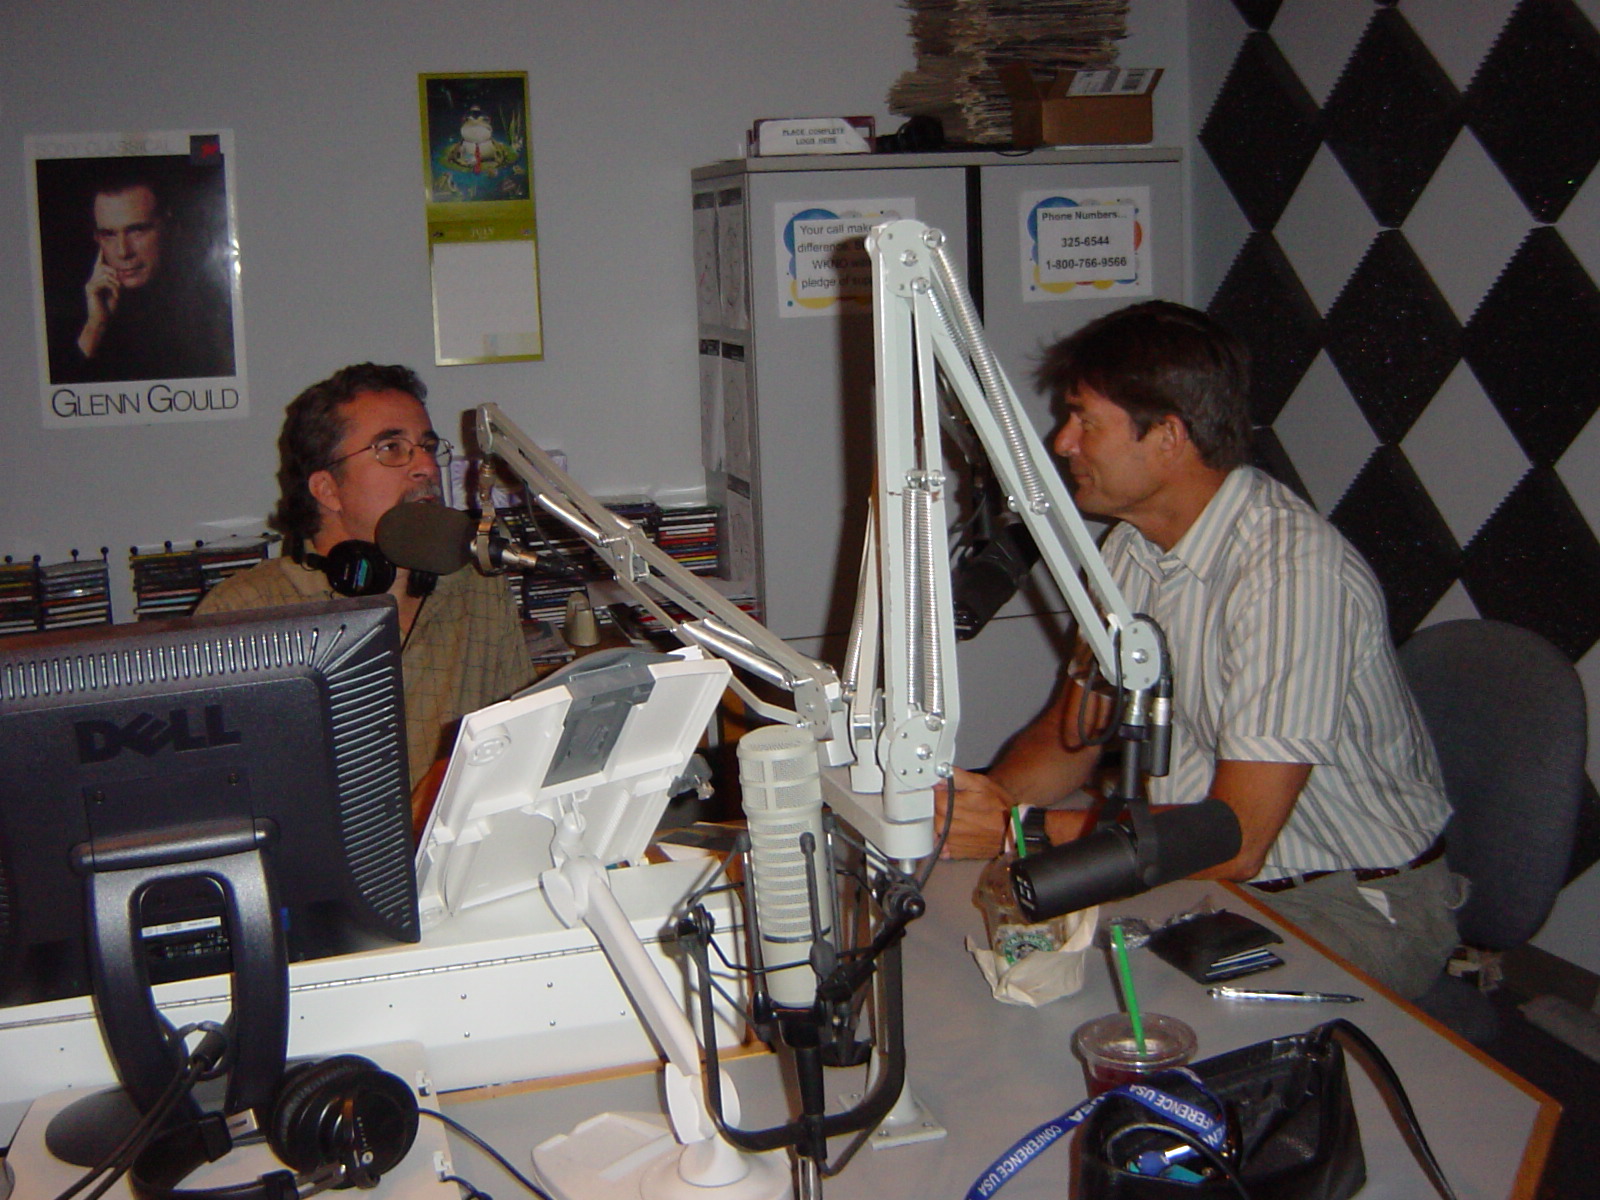 Interview on WKNO, Public Radio with Daryl Snodgrass